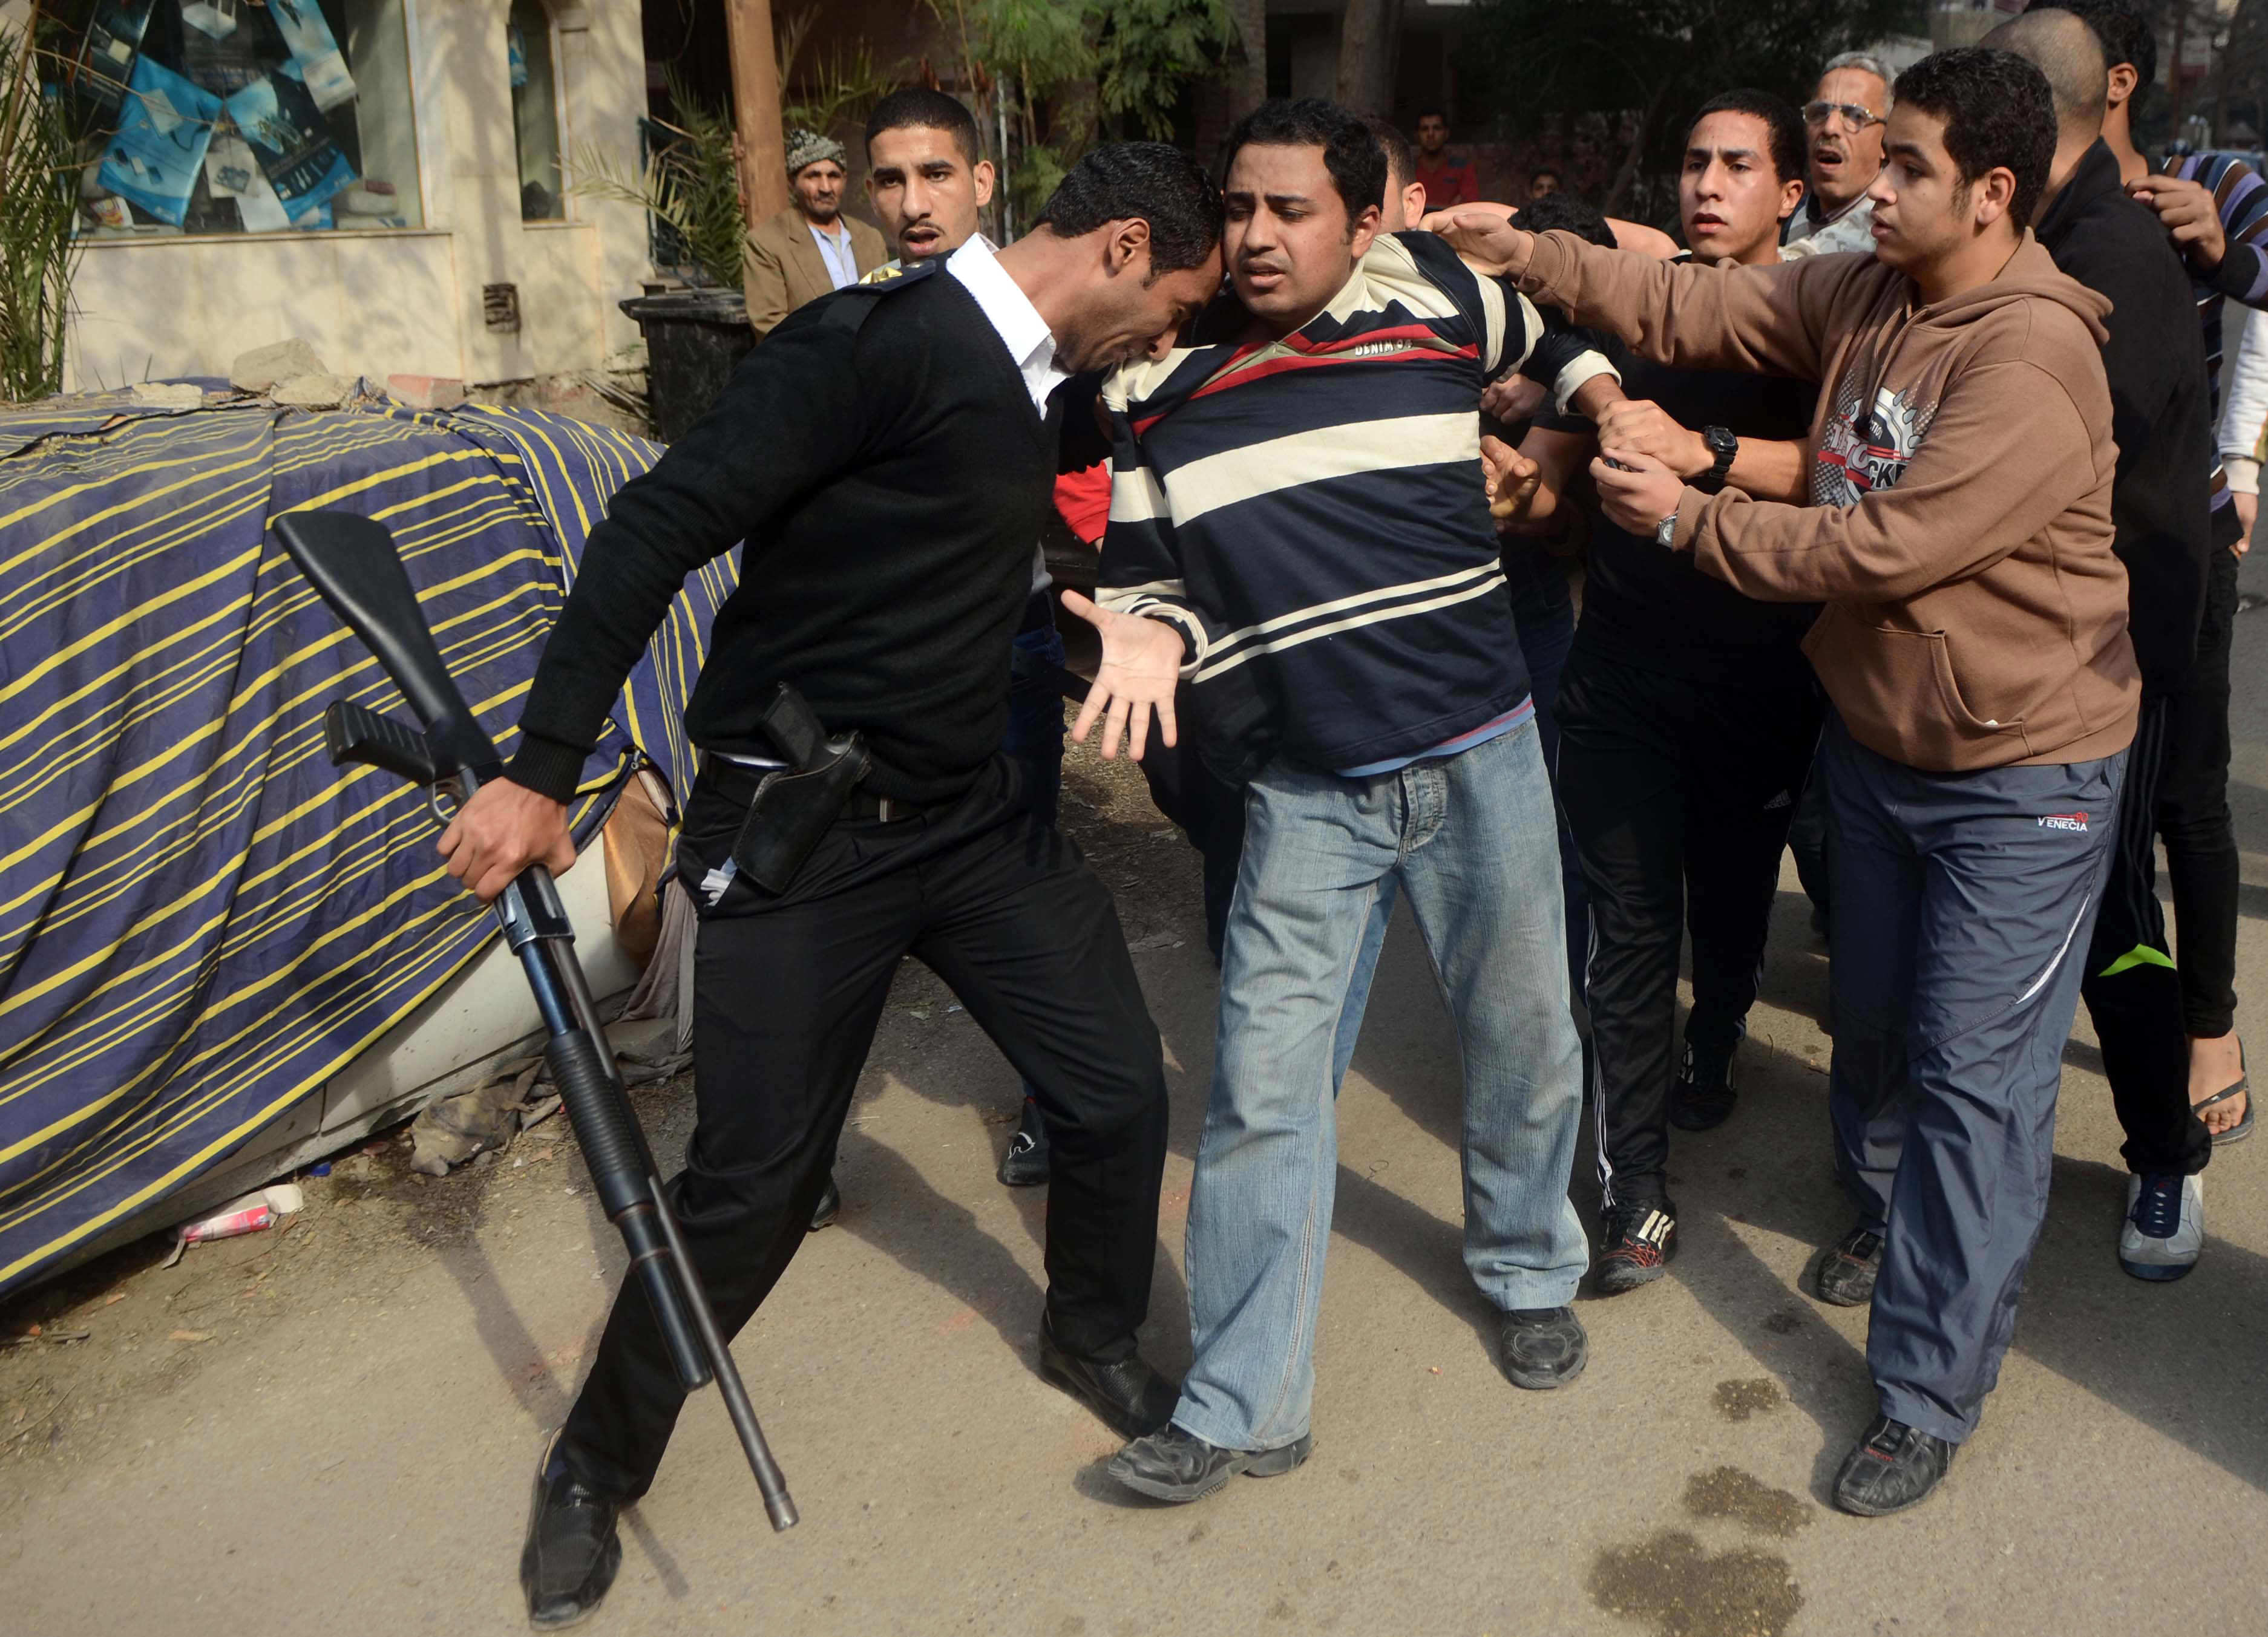 Conflicting reports on killing of ‘9 Muslim Brotherhood members’